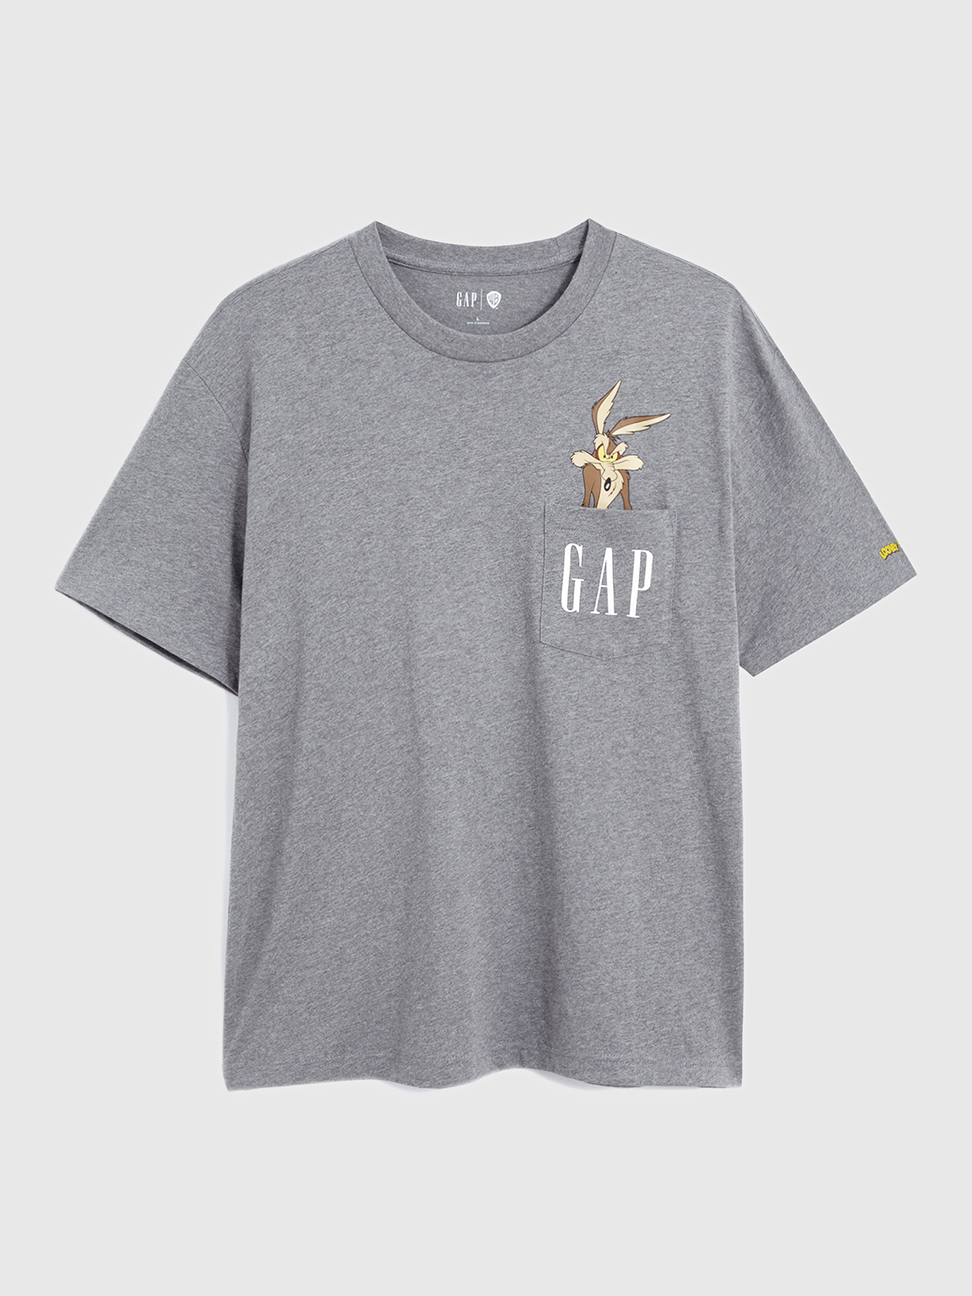 男裝|Gap x Warner Bros系列 Logo純棉短袖T恤 